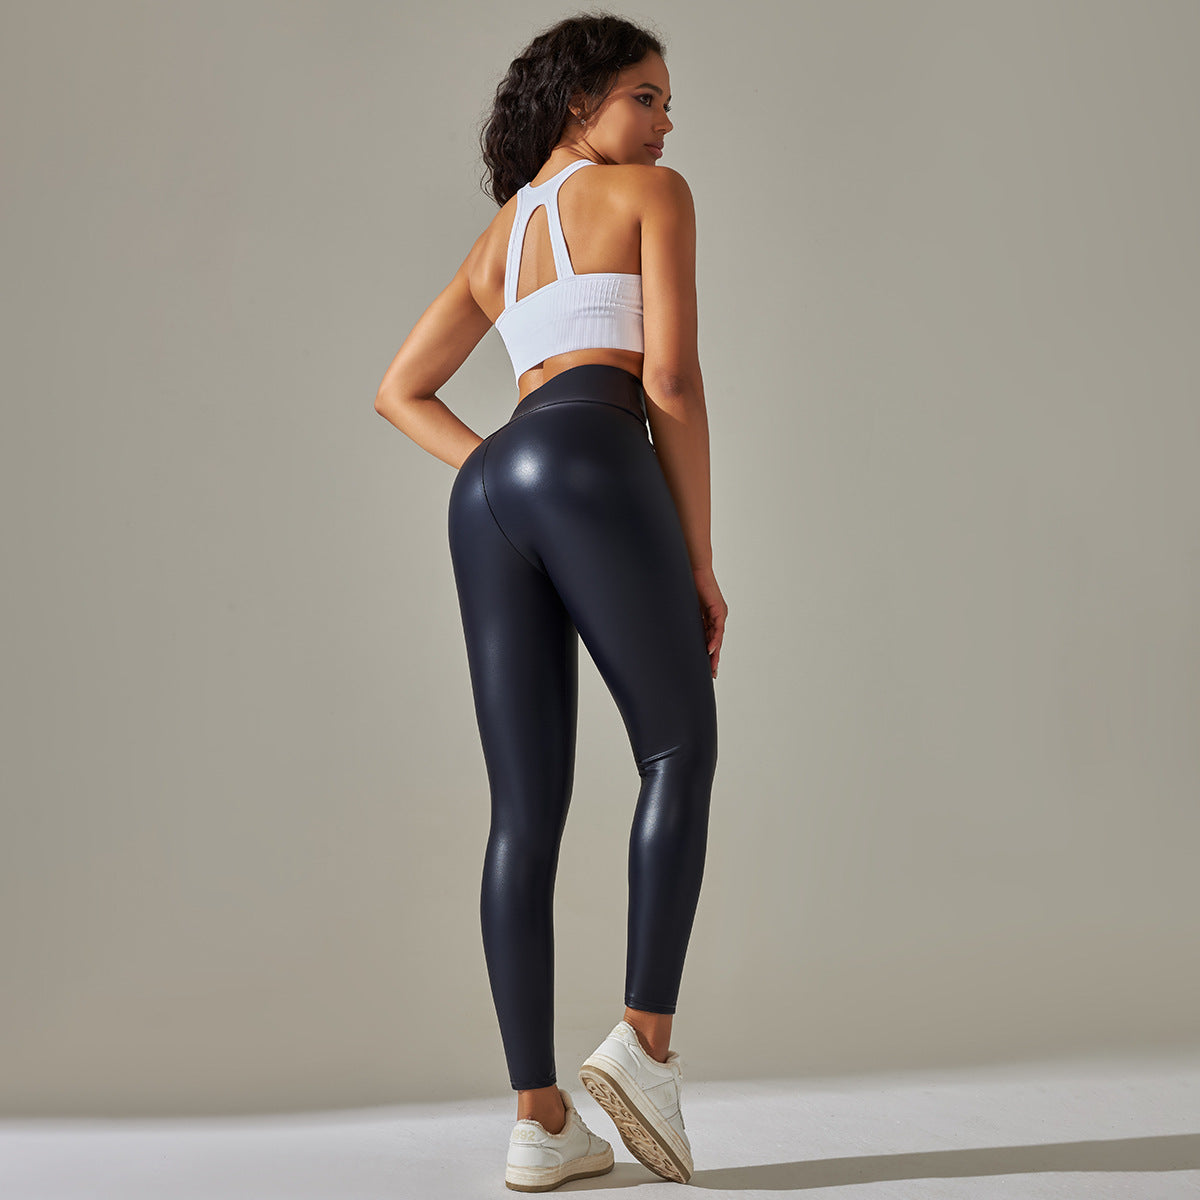 Sexy Elastic Pu High Waist Yoga Leggings-Pants-Black-XS-Free Shipping Leatheretro